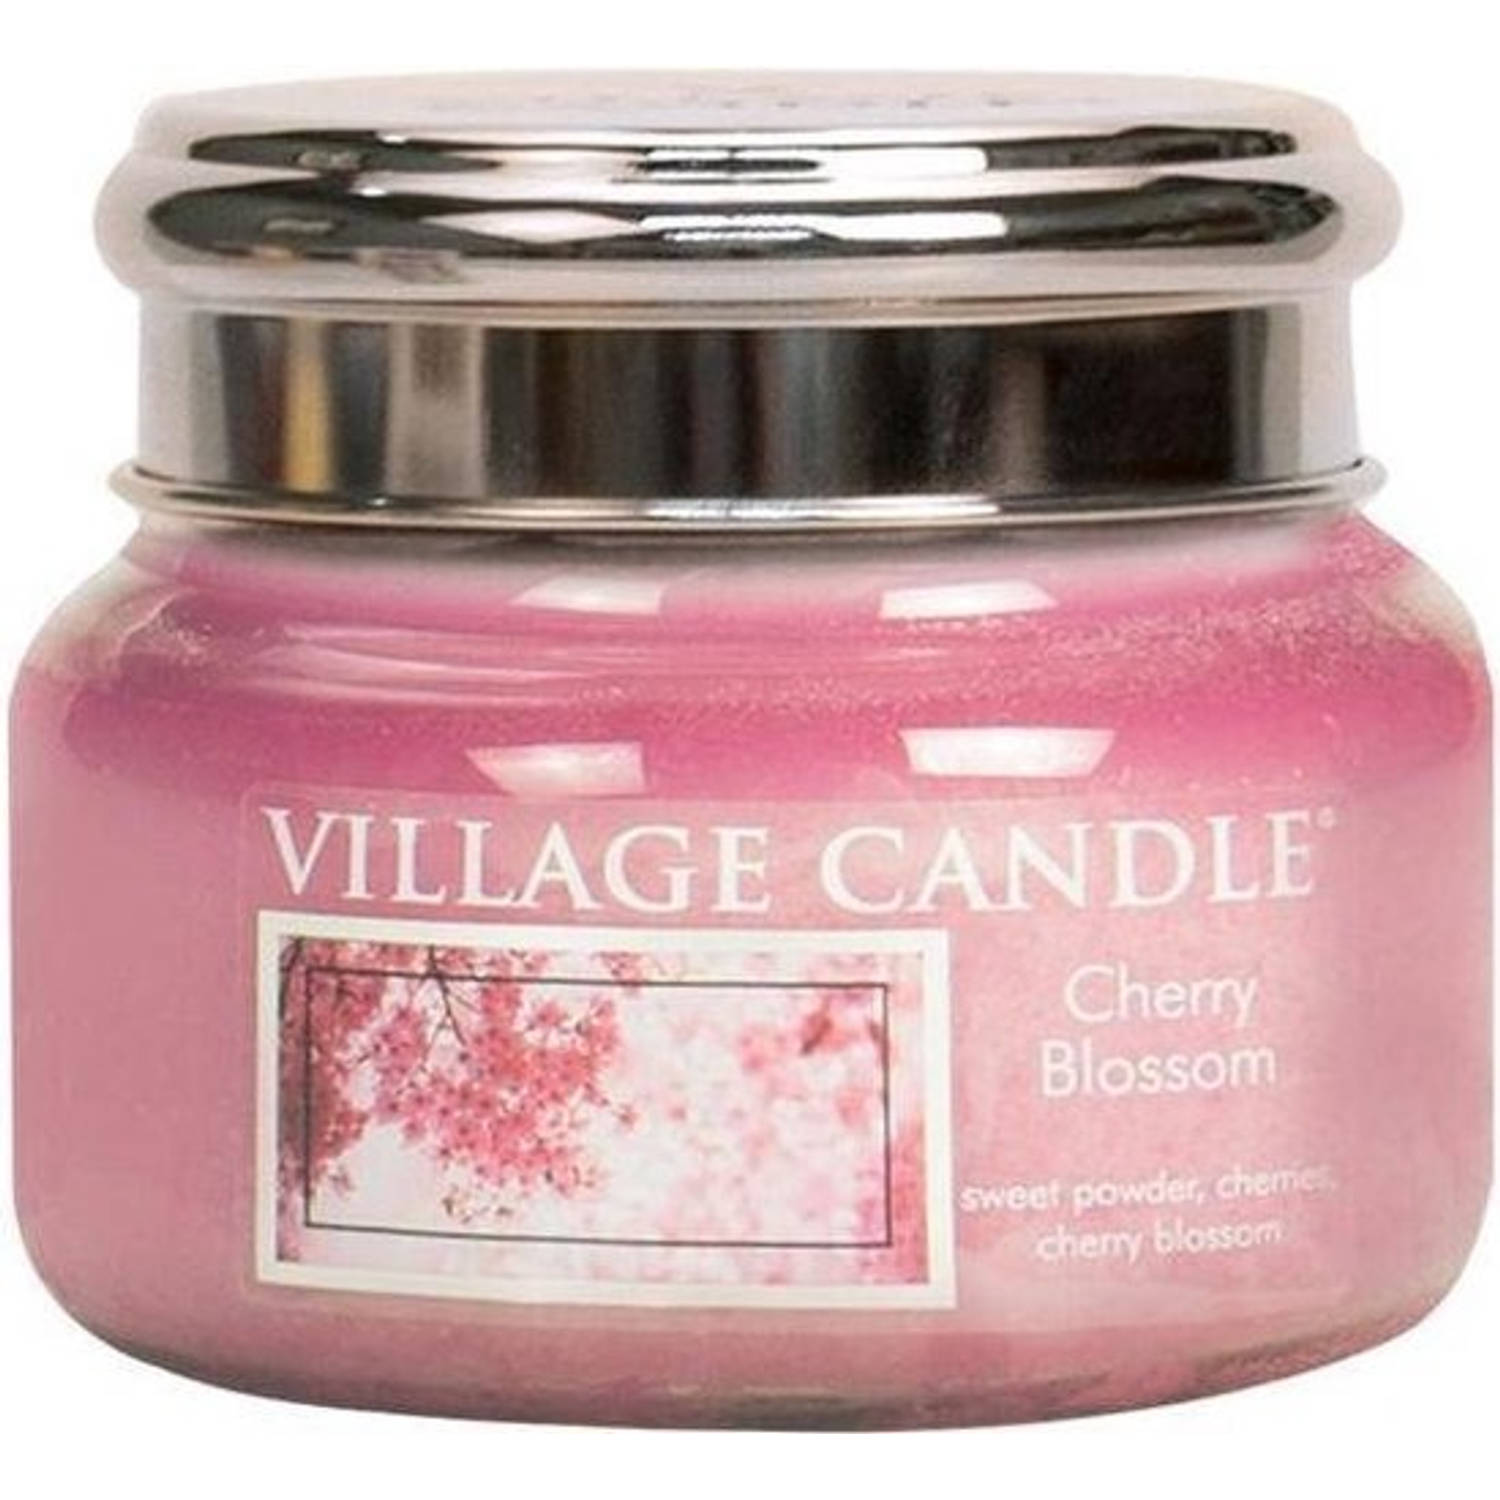 Village Candle Village Geurkaars Cherry Blossom kersenbloesem rijpe kers zoet talkpoeder - small jar